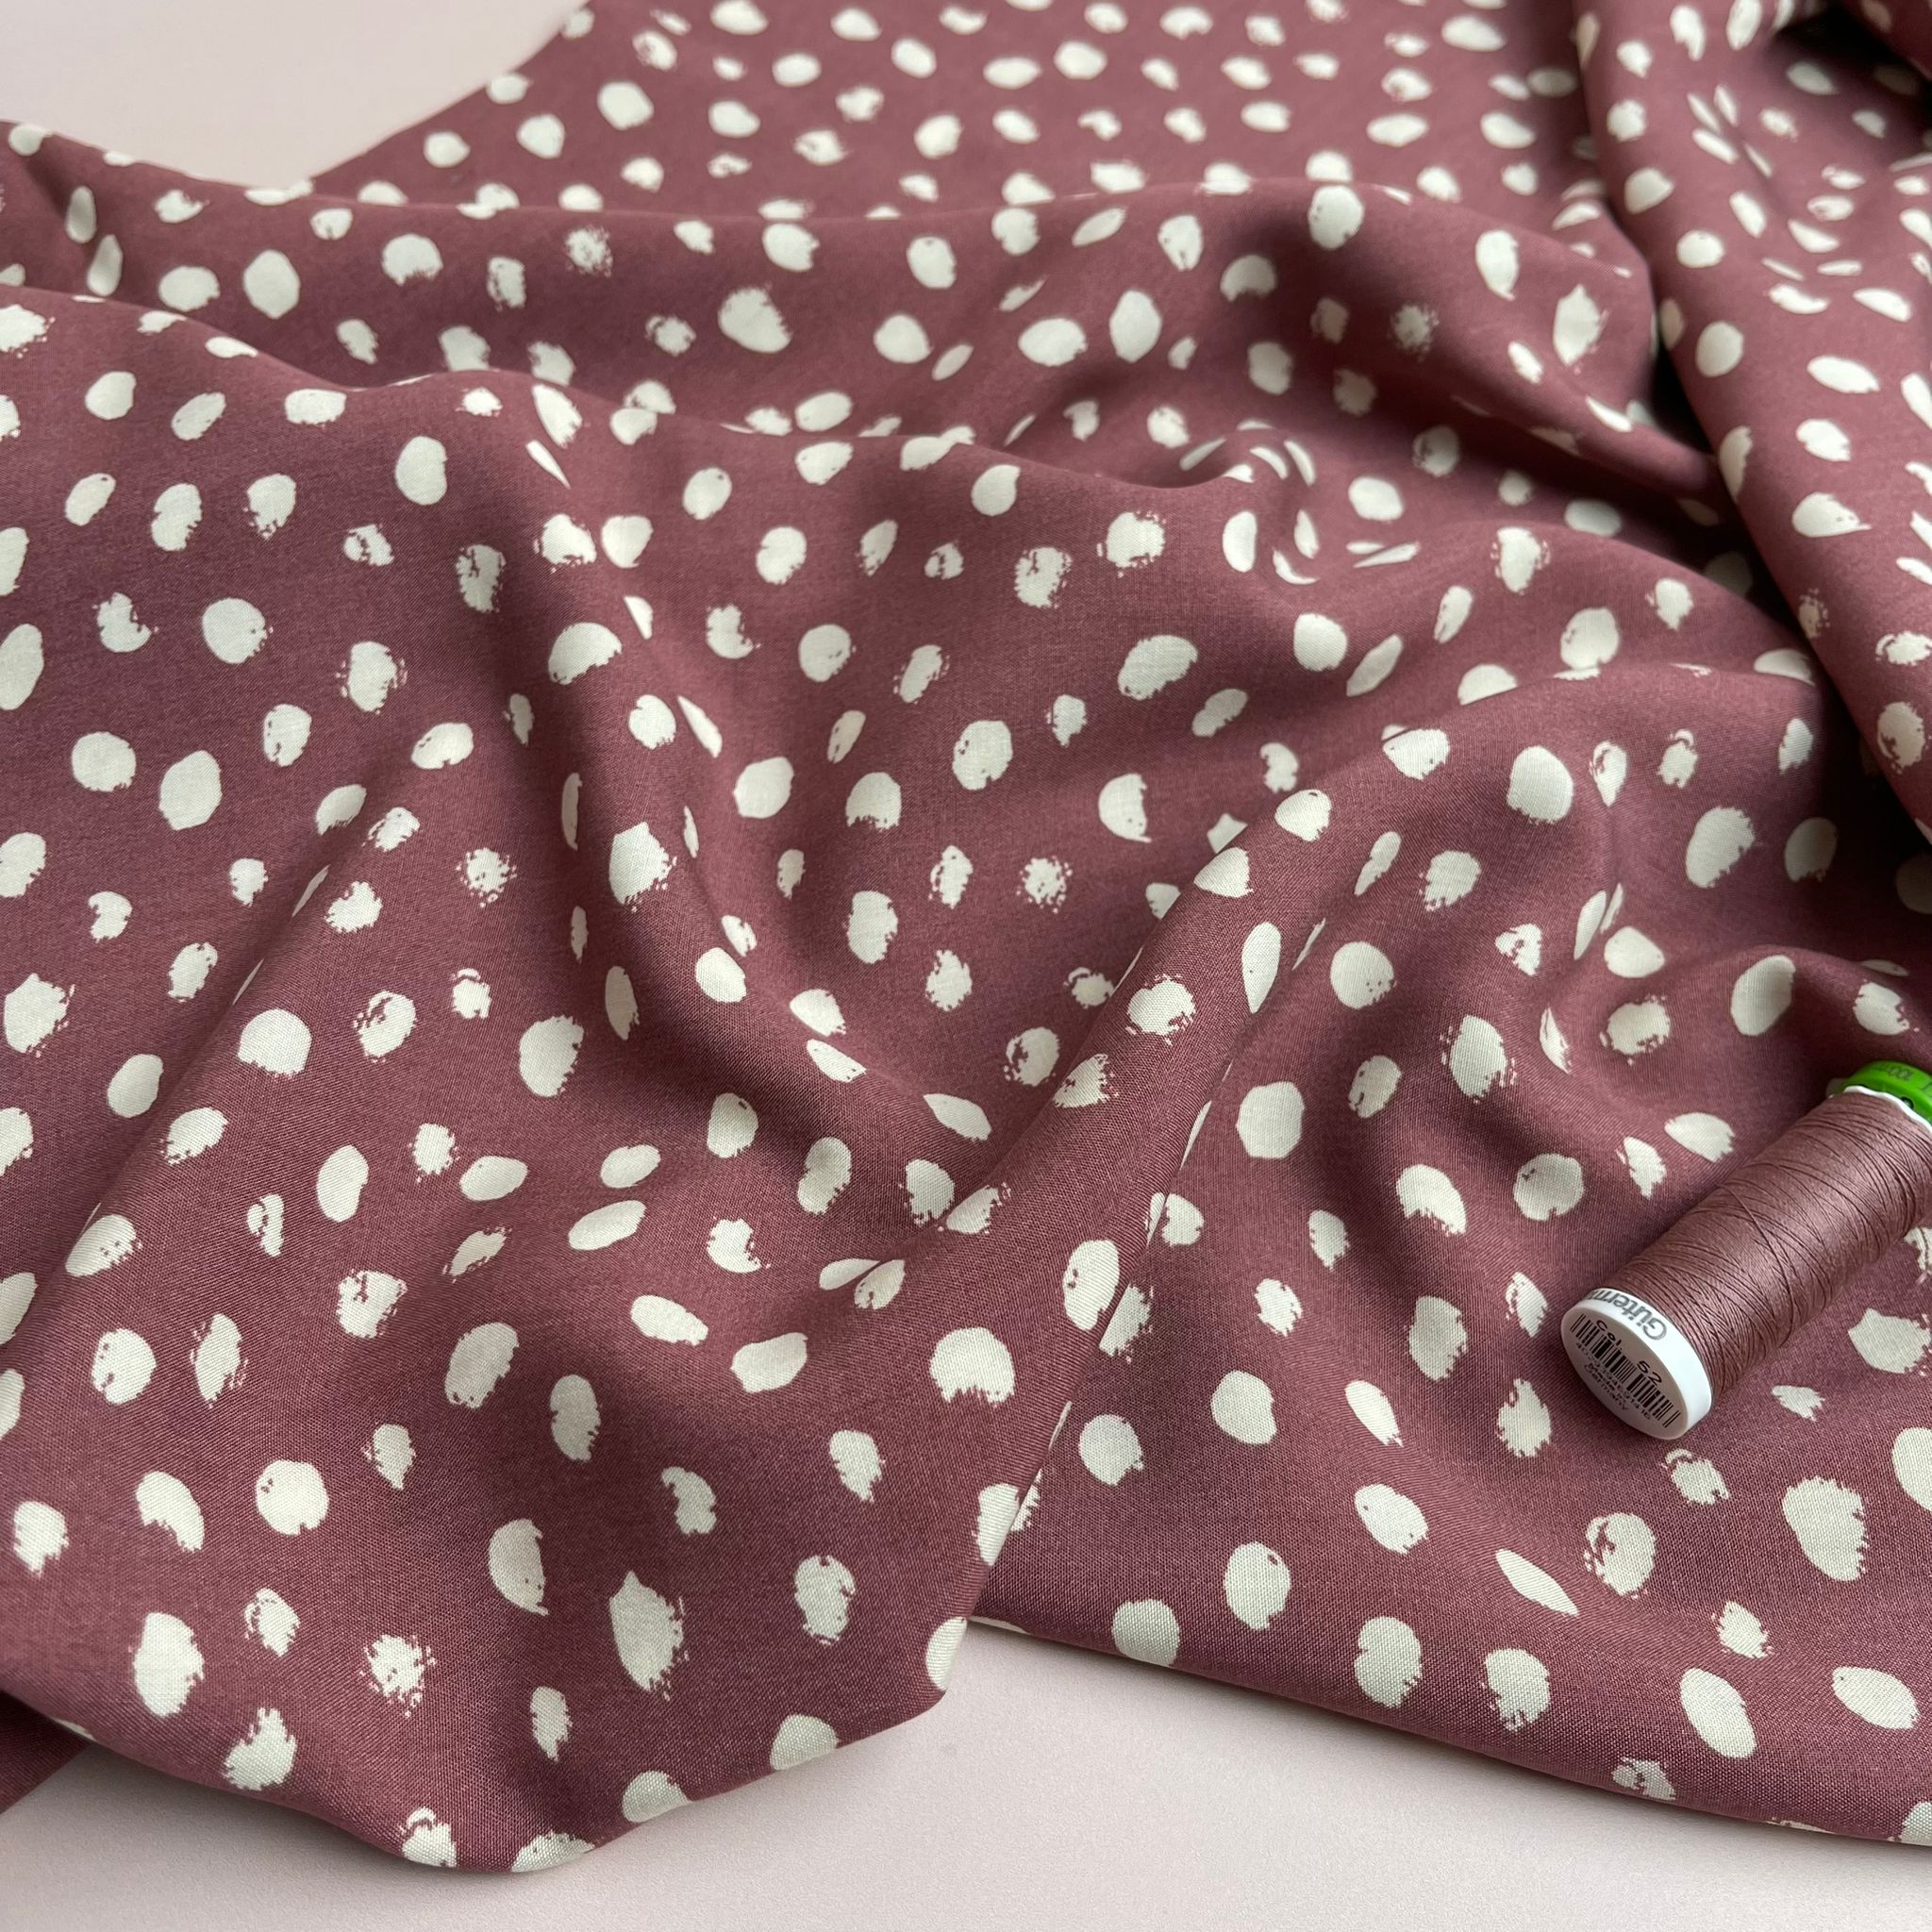 Sewing Kit - Regalia Blouse in Abstract Dots Viscose